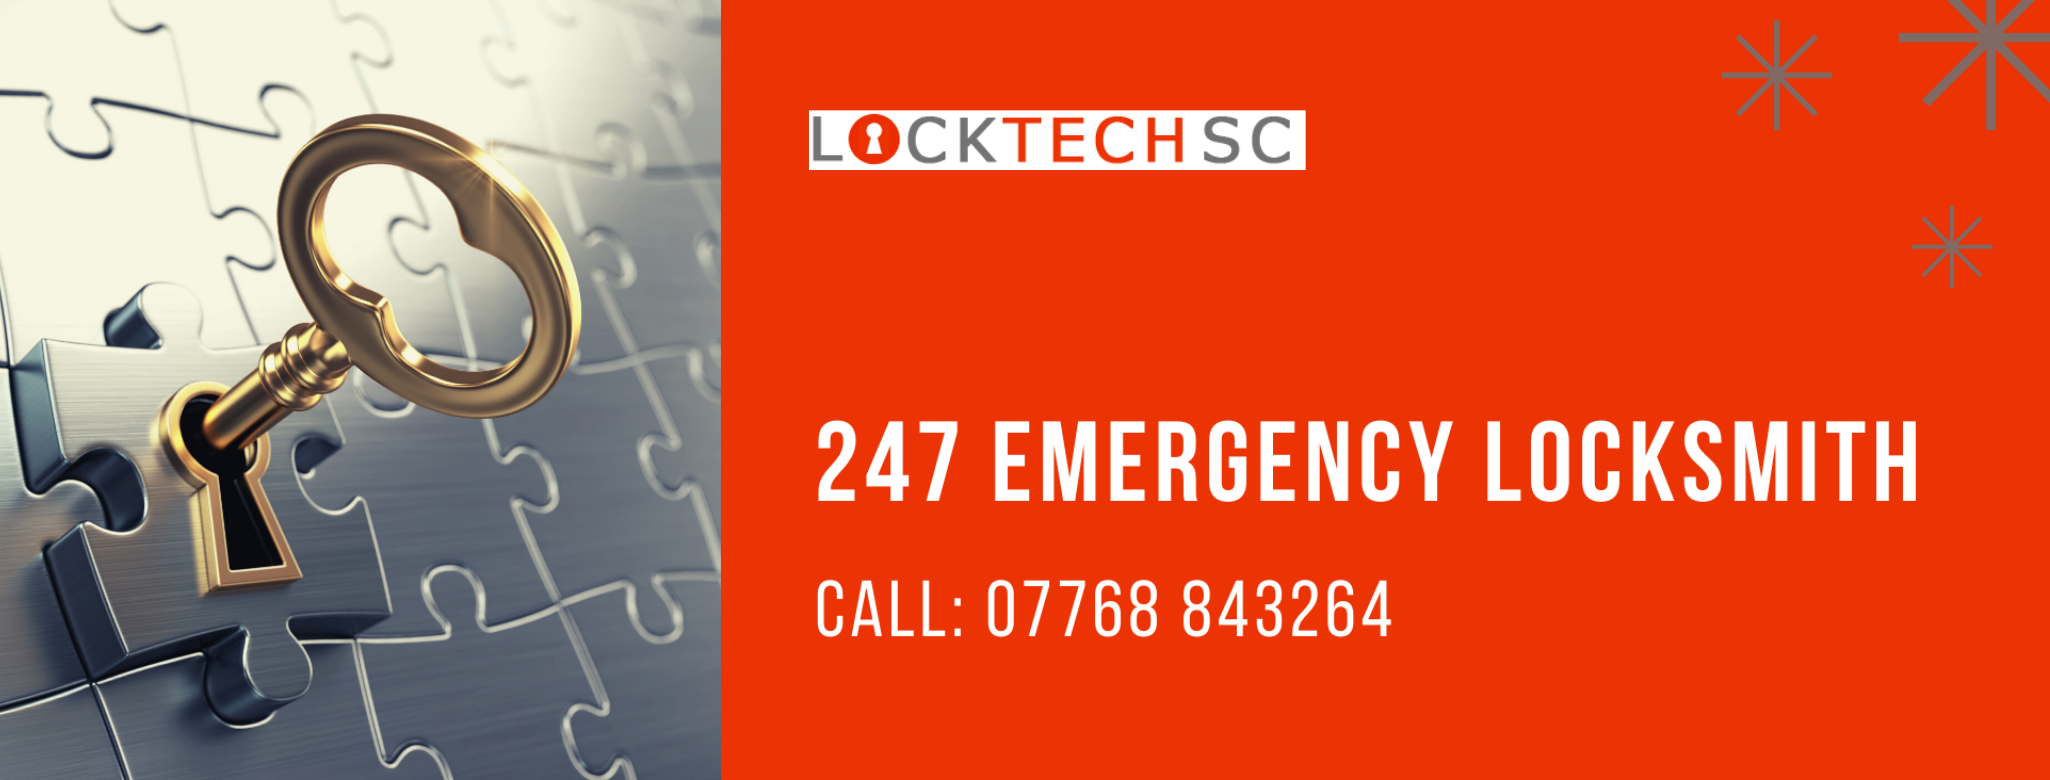 Logo of Locktech SC - Locksmith in Chesham Locksmiths In Hertfordshire, Hemel Hempstead